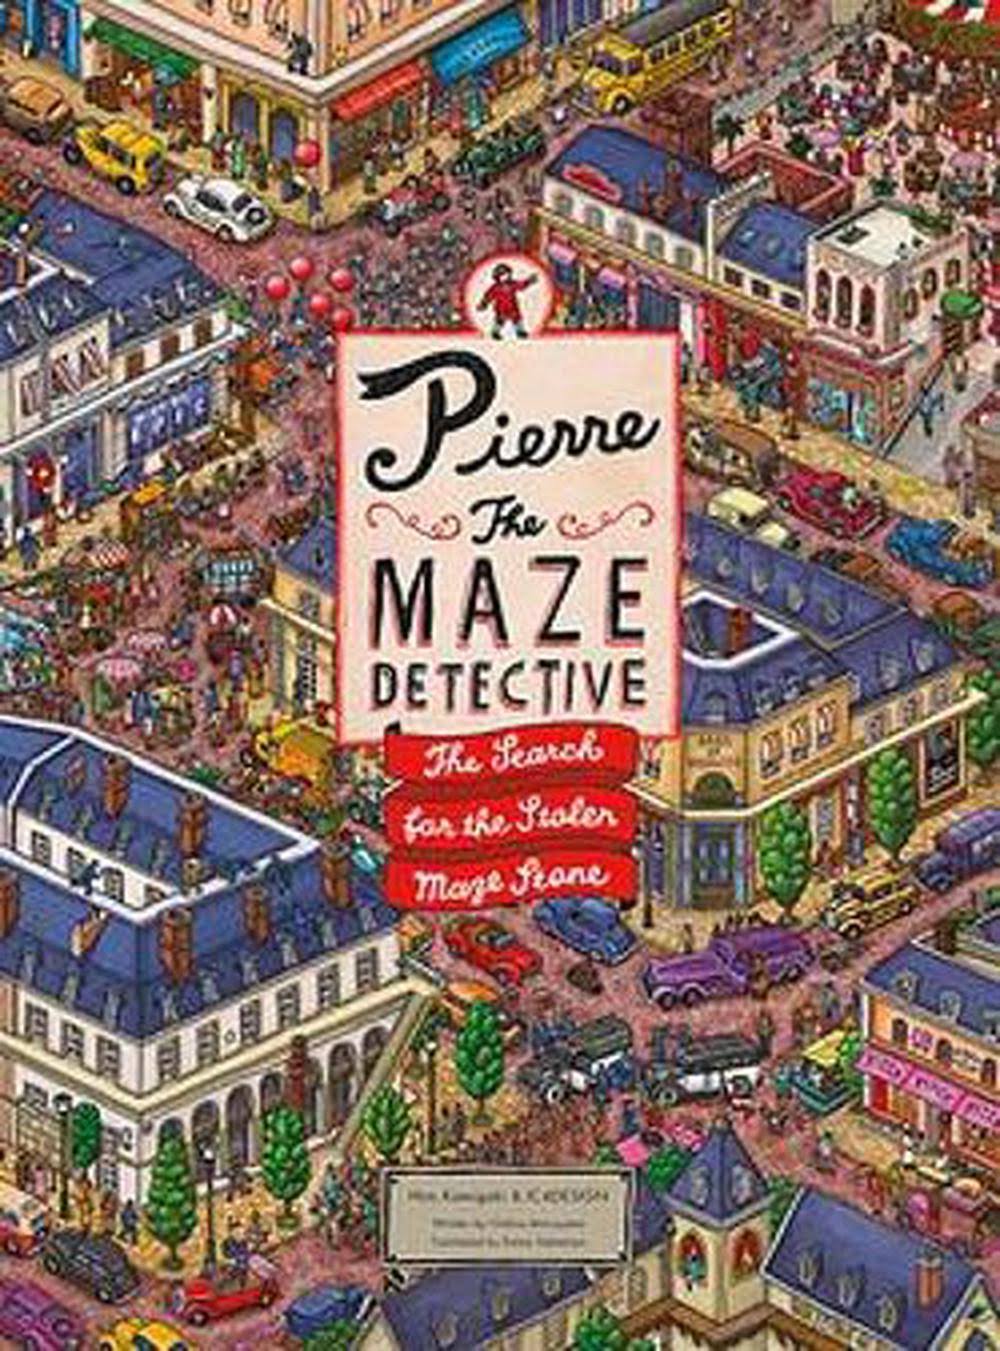 Pierre the Maze Detective: The Search for the Stolen Maze Stone - Kamigaki Hiro